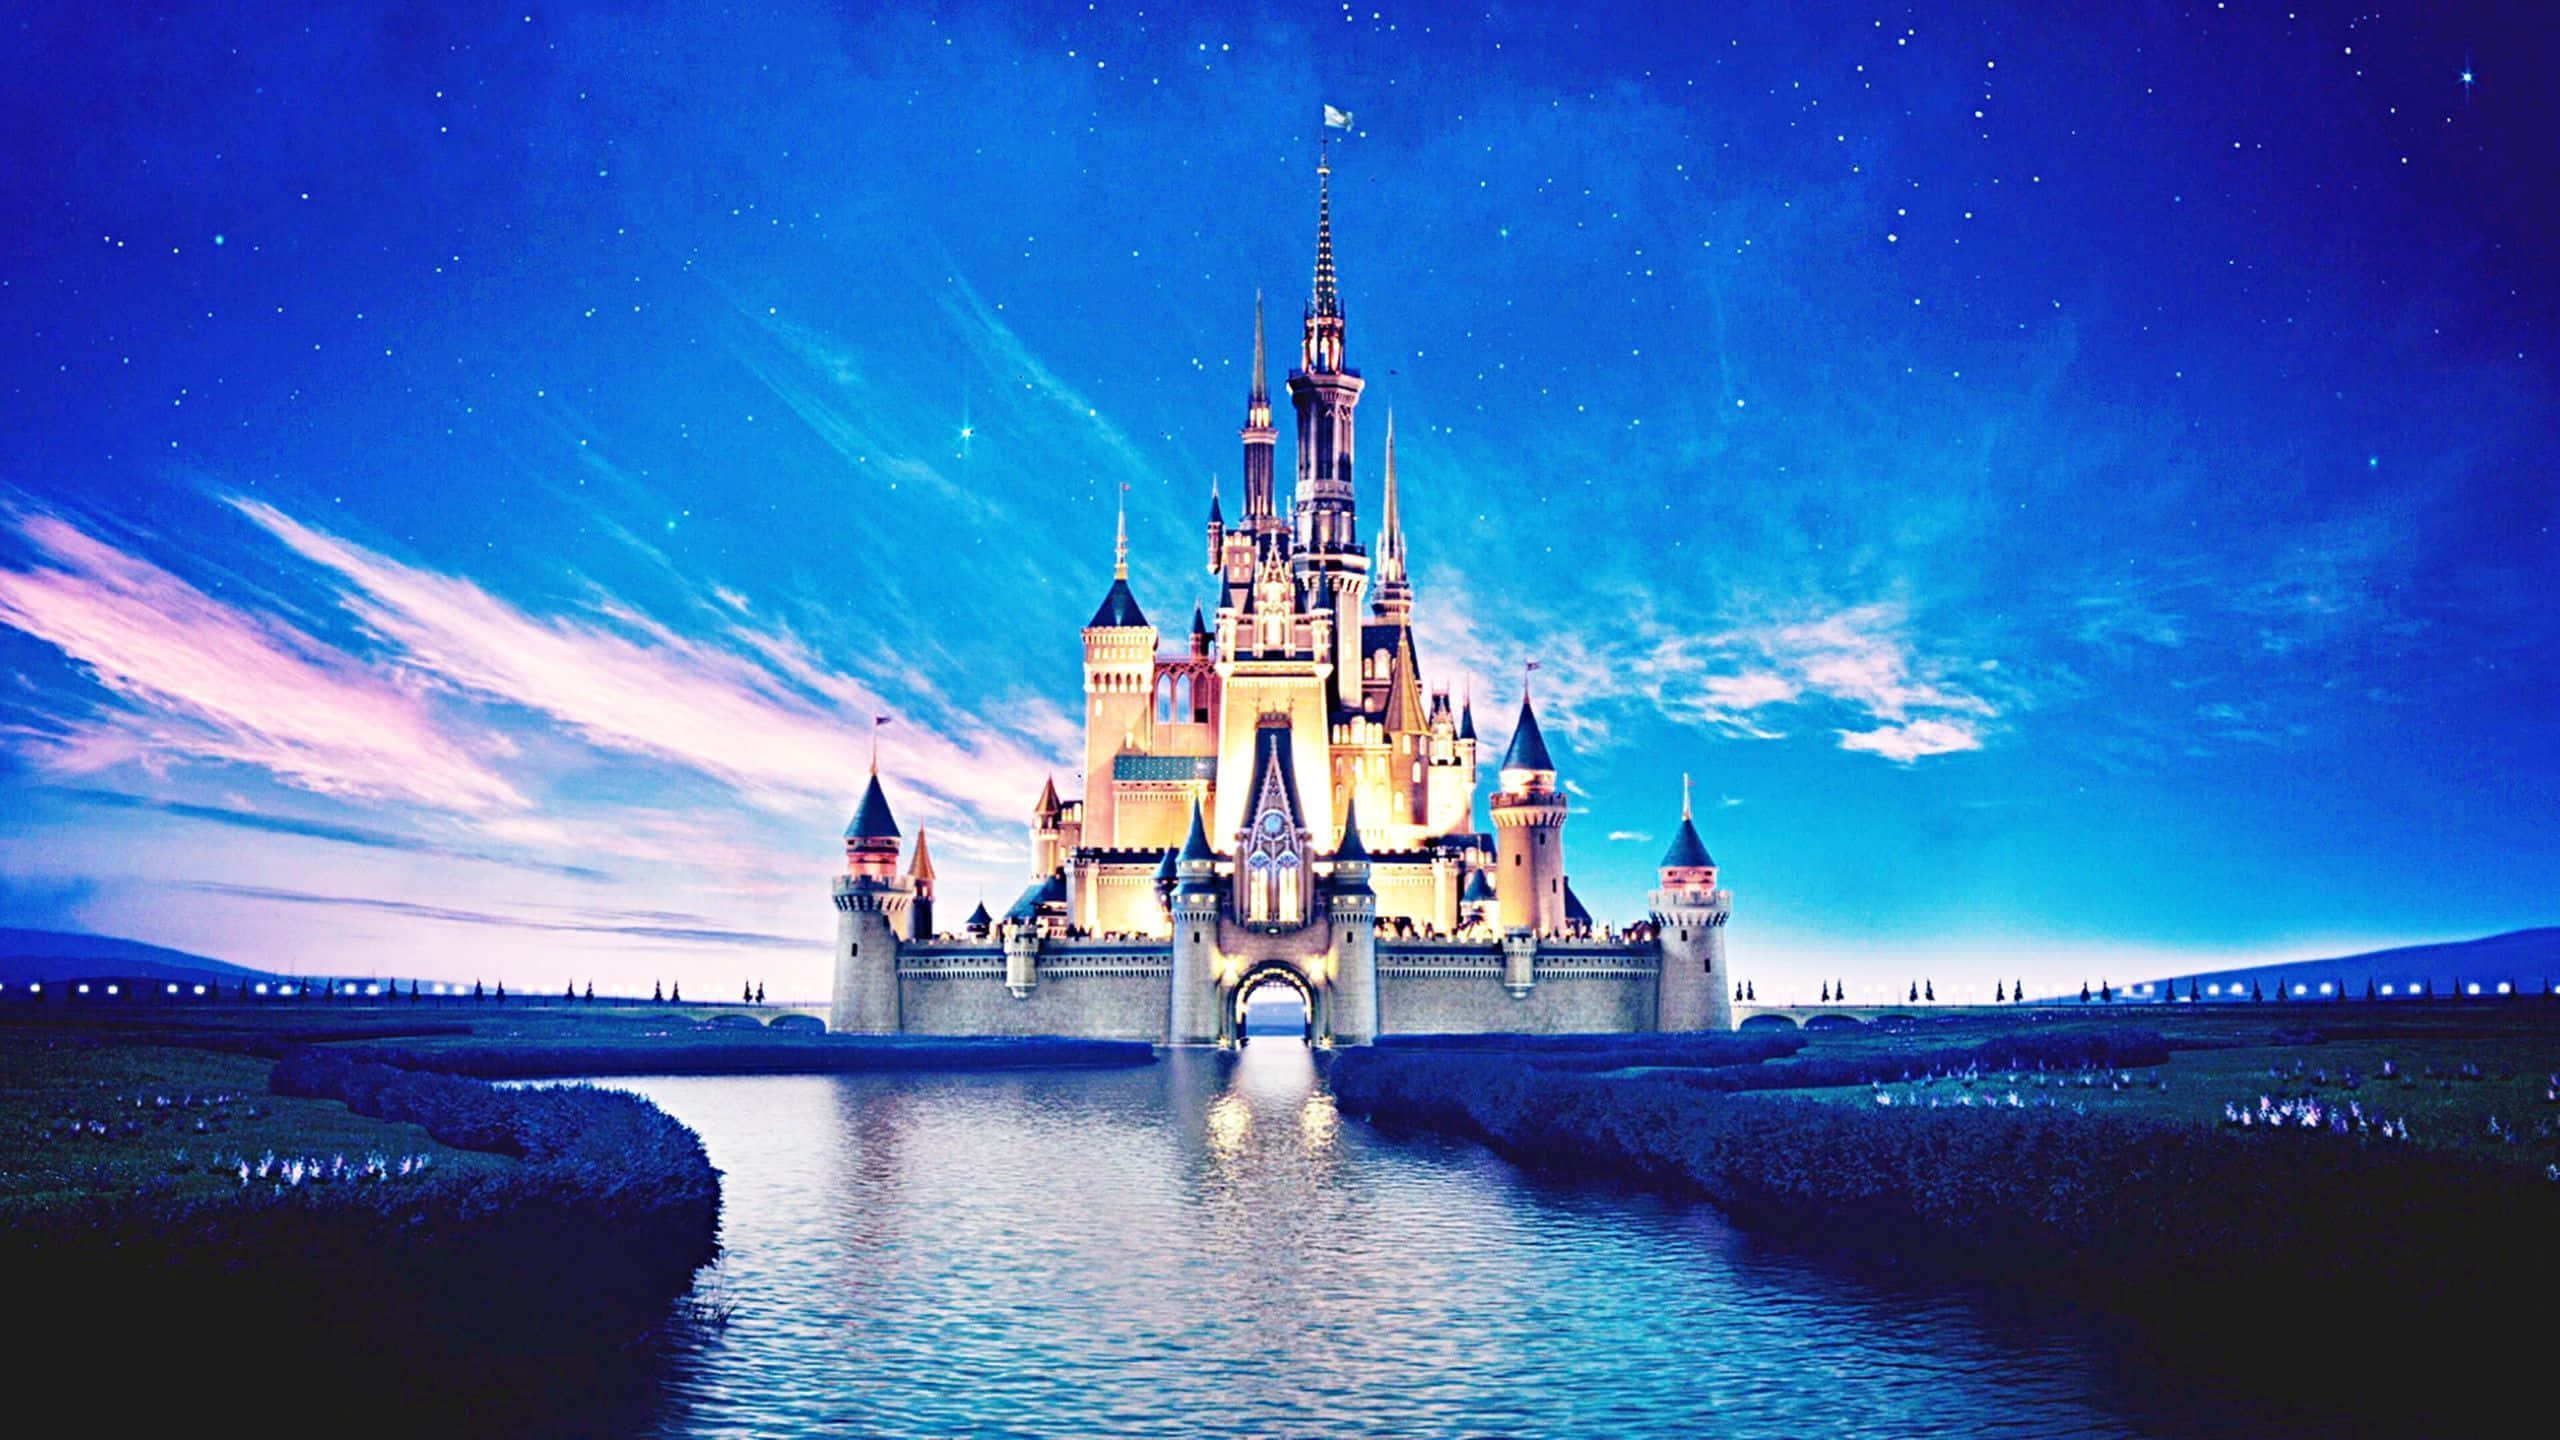 Disneyschloss-hintergrundbilder In Hd